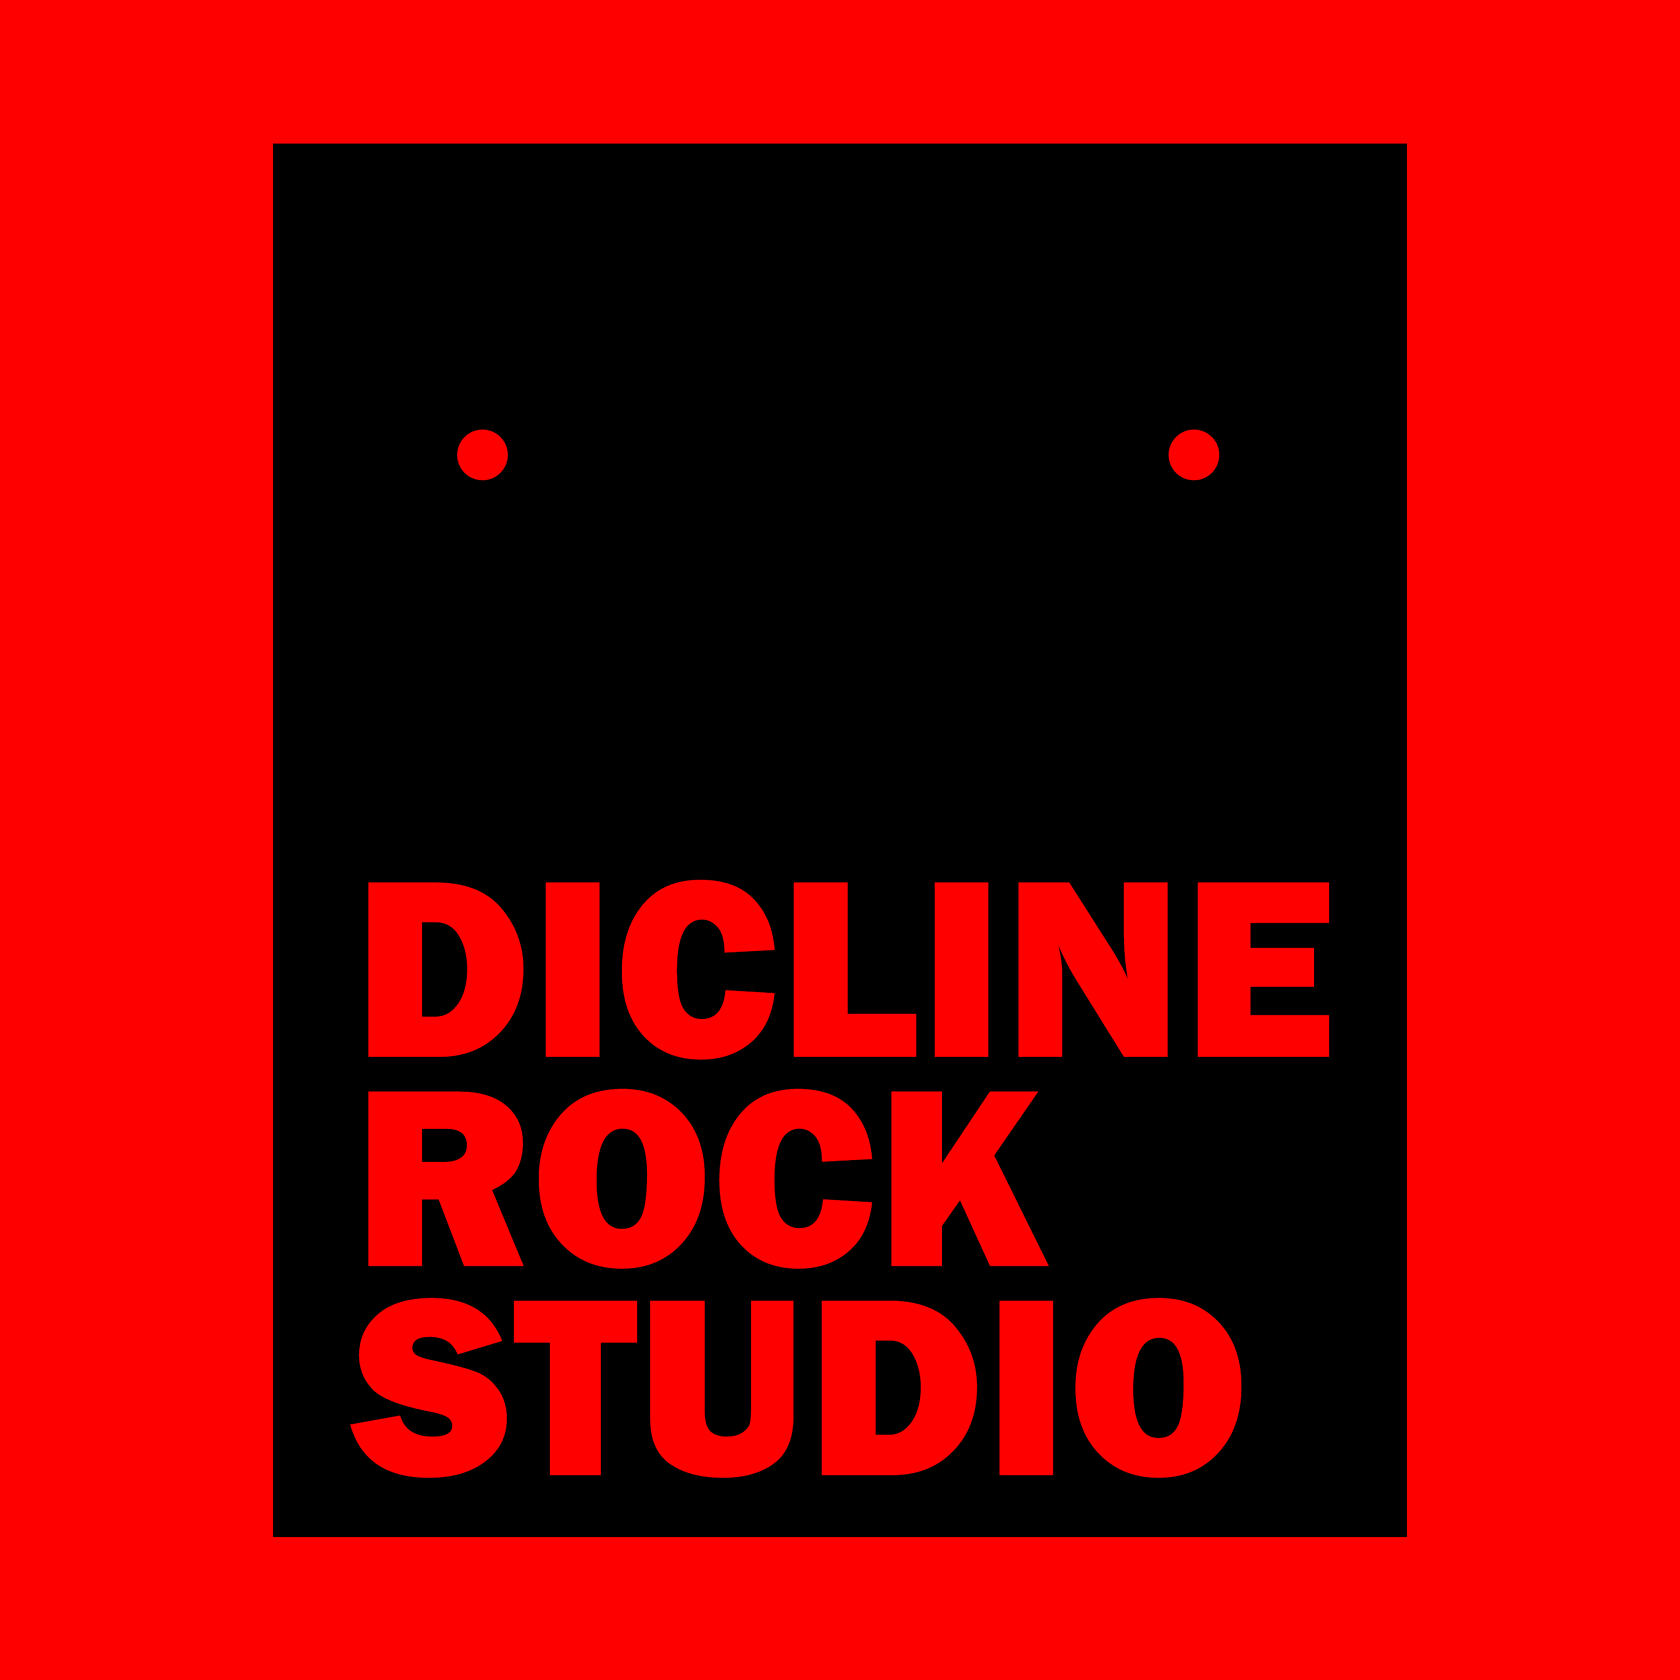 DICLINE ROCK STUDIO